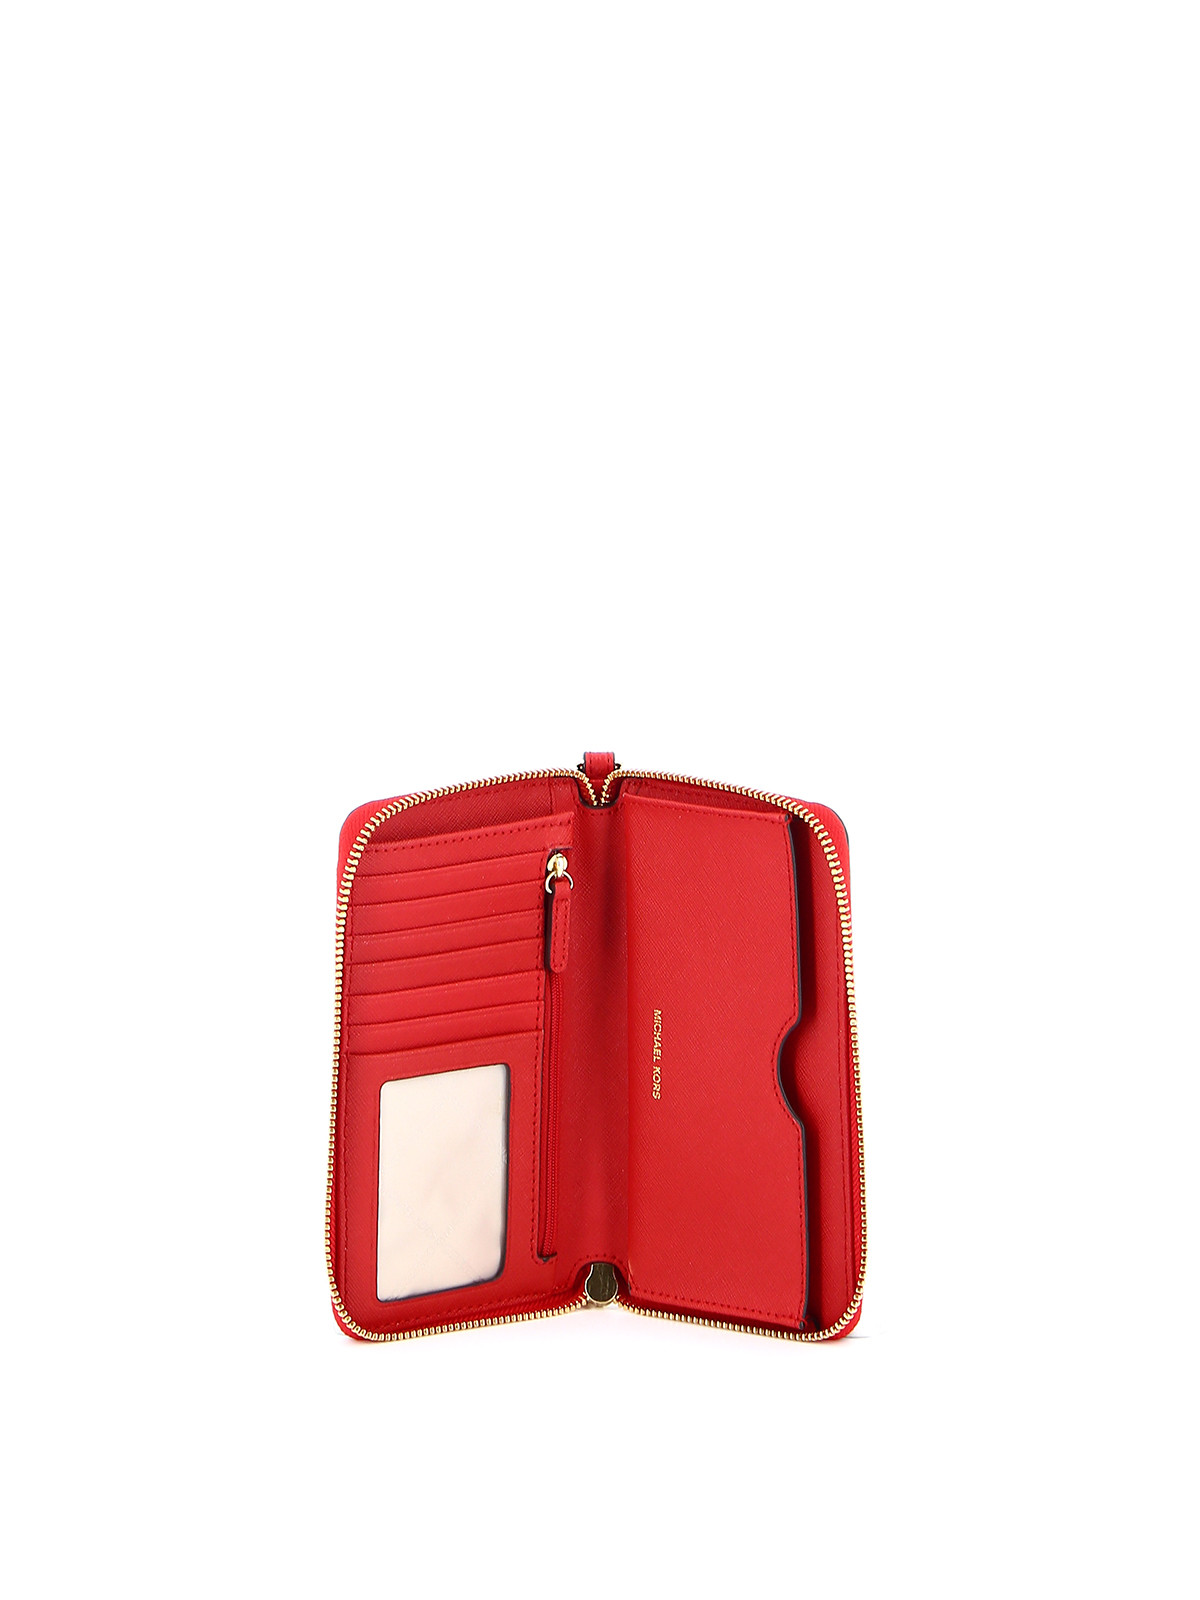 Wallets & purses Michael Kors - Jet Set large leather smartphone wallet -  34F9GM9E3L683